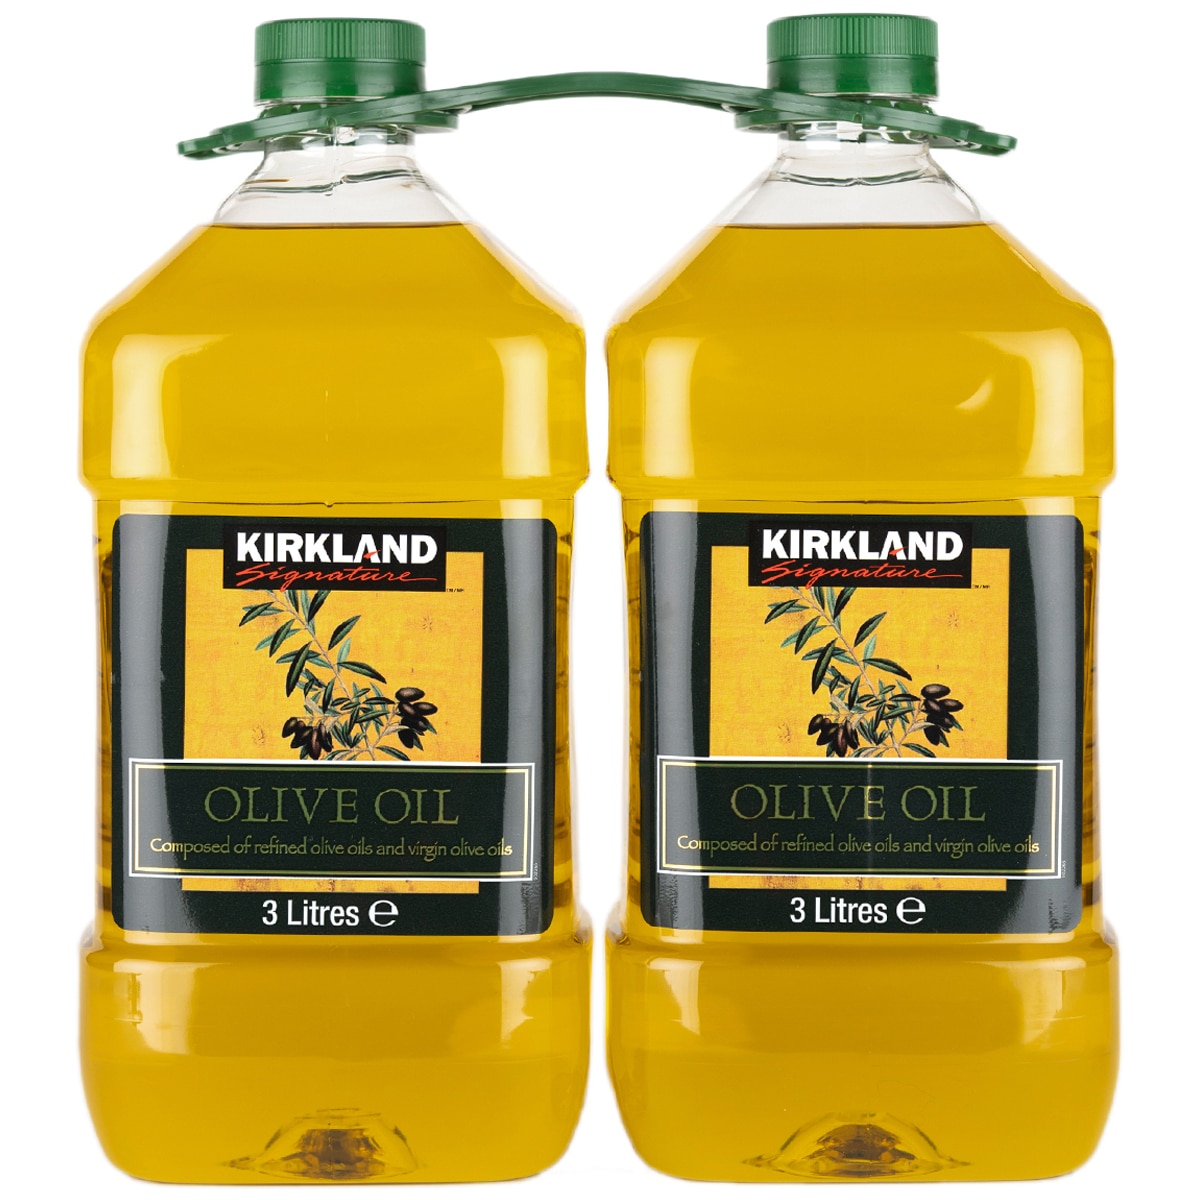 Kirkland Signature Olive Oil 2 x 3 Litres Costco Australia